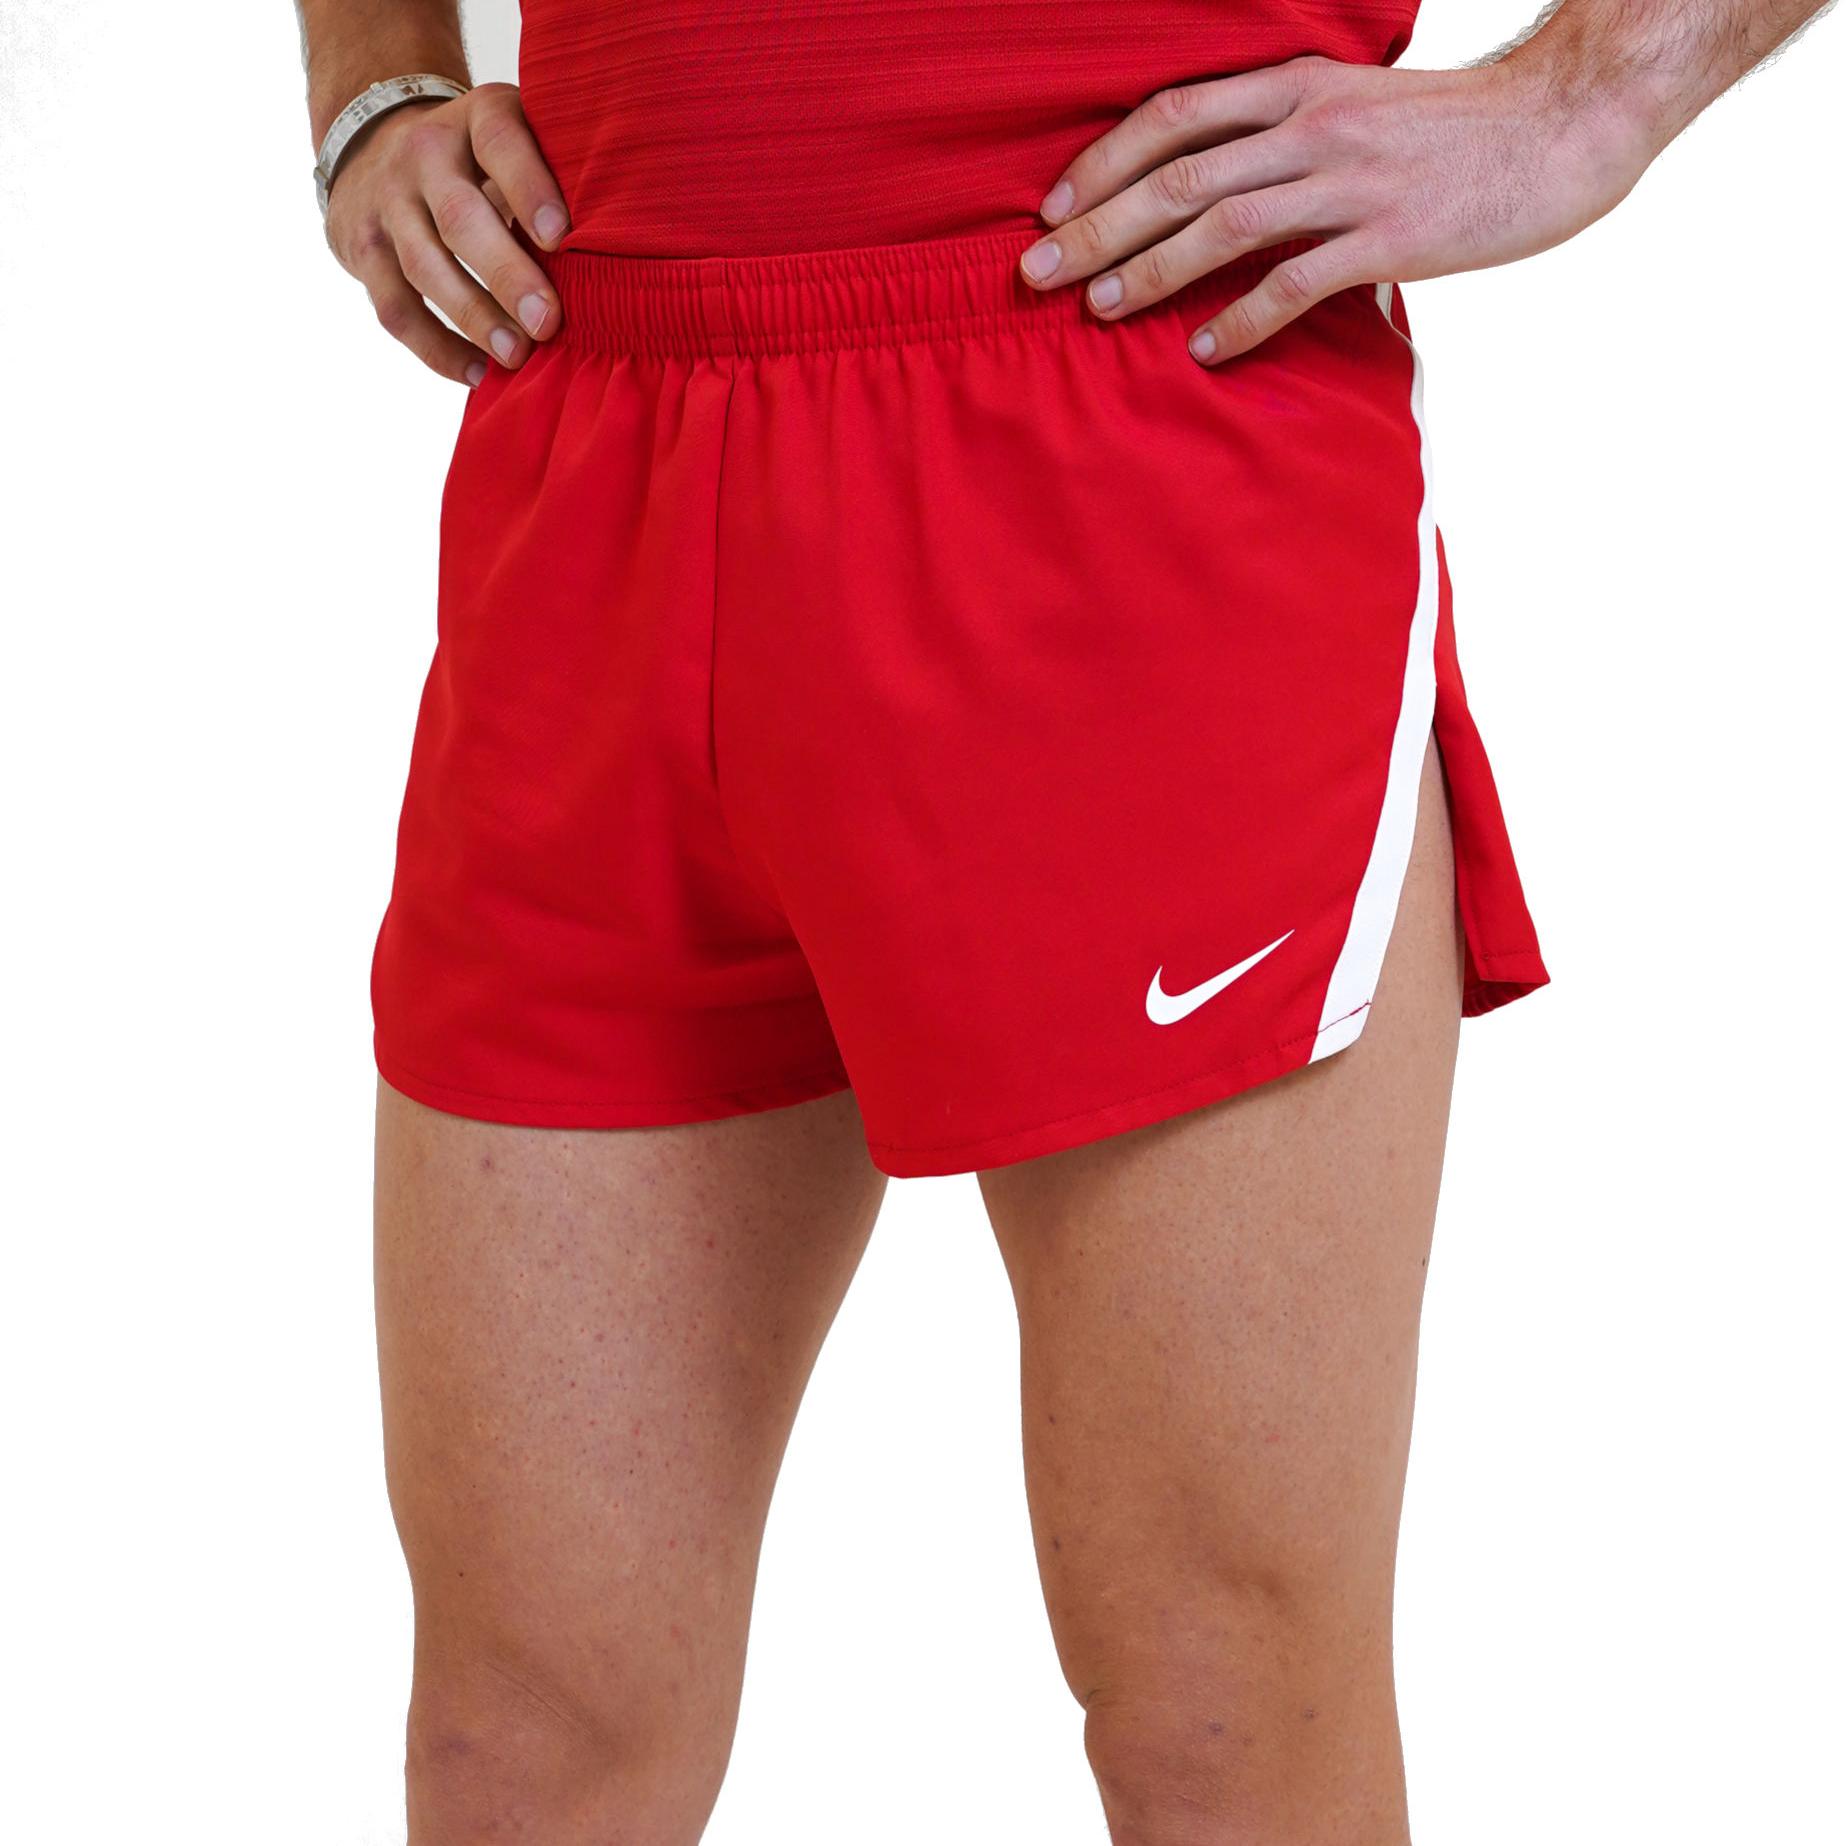 Nike Mens Fast 2 Inch Running Shorts